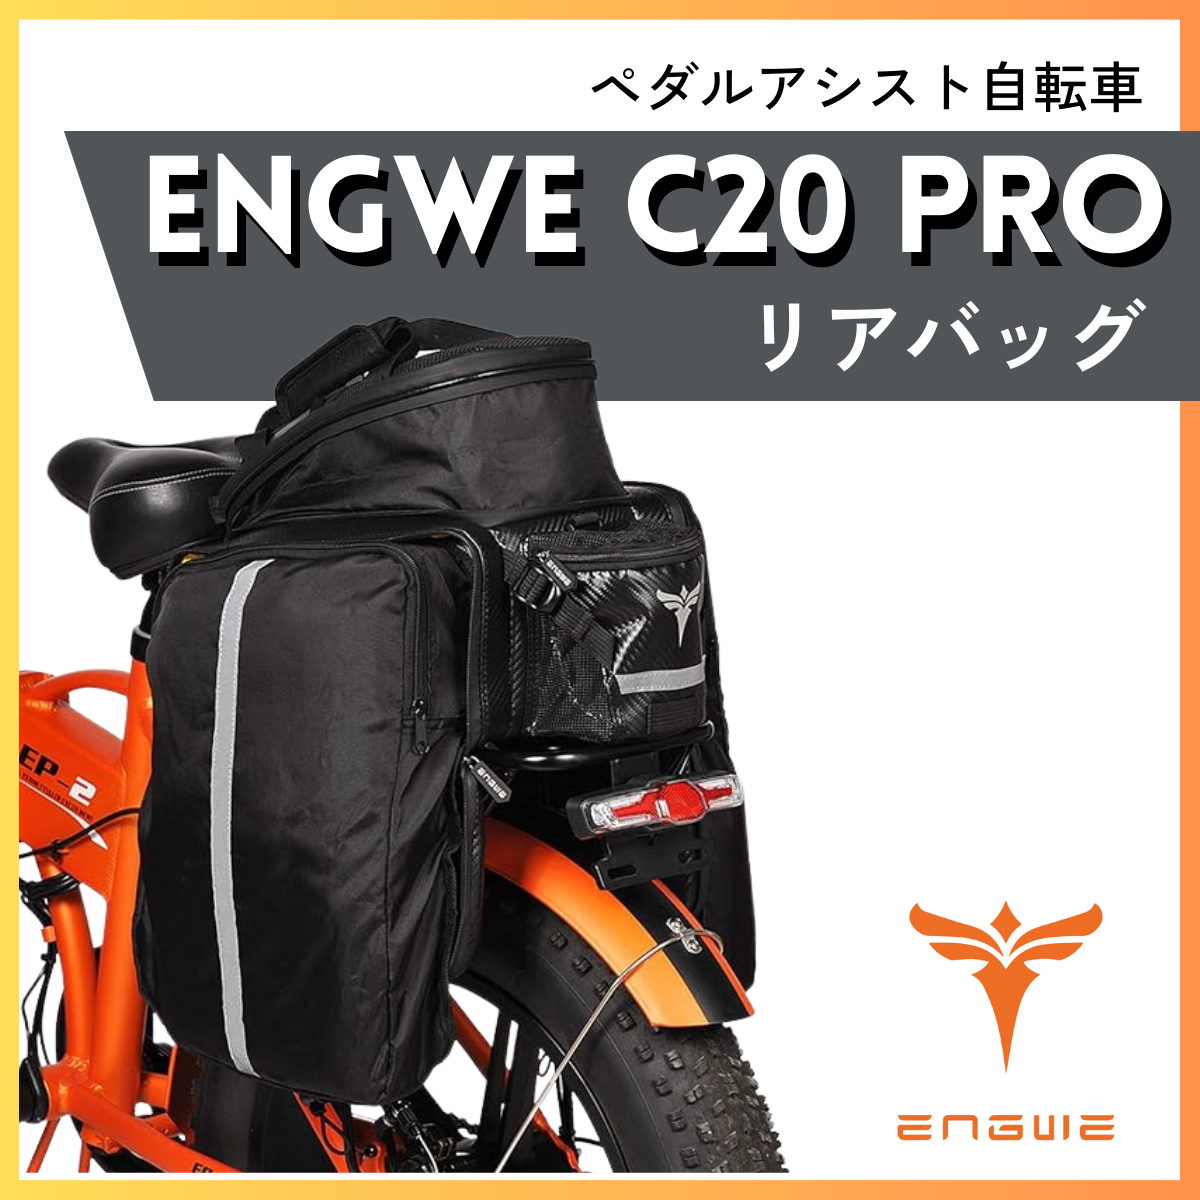 ENGWE C20 PRO専用 リアキャリア